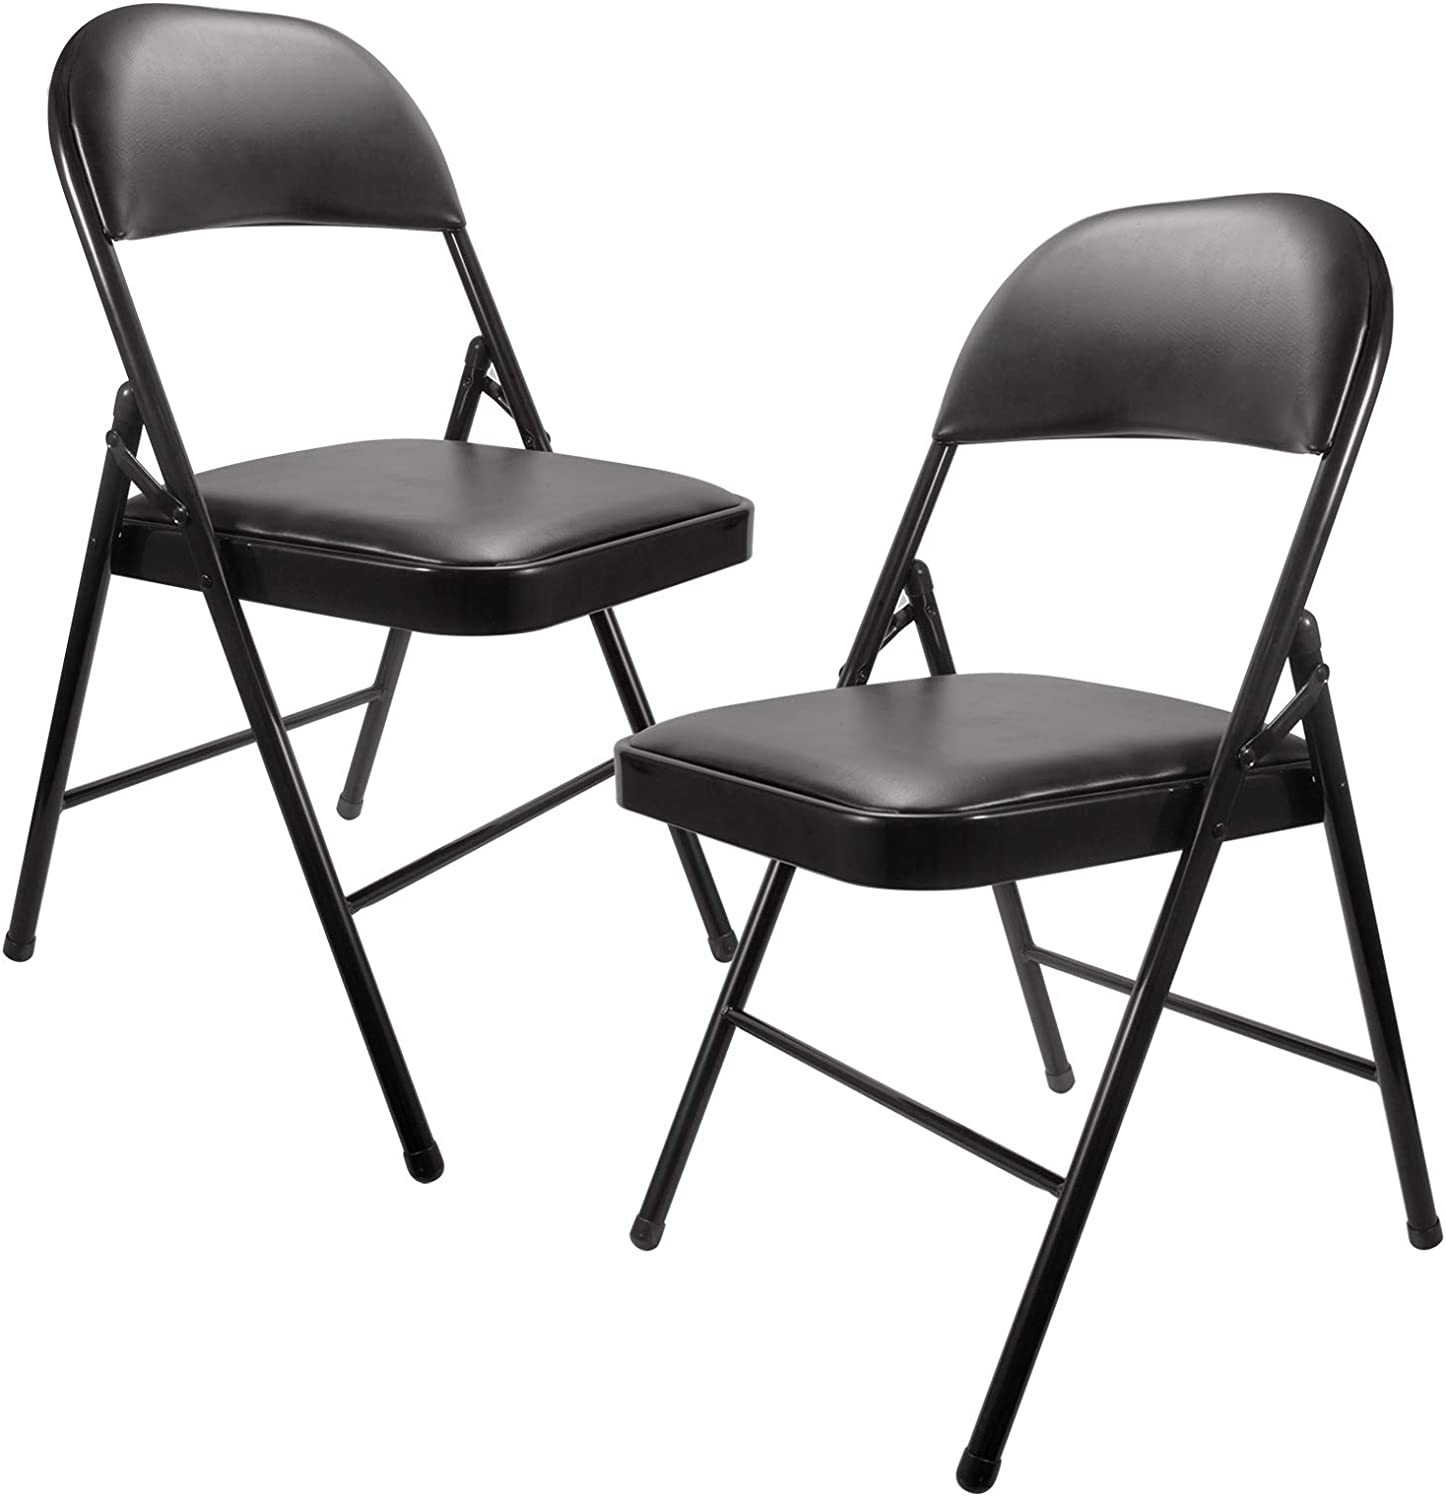 Mataas na De-kalidad na Furniture Folding Chair na may Metal Frame Black Folding Chair na may Padded Seat